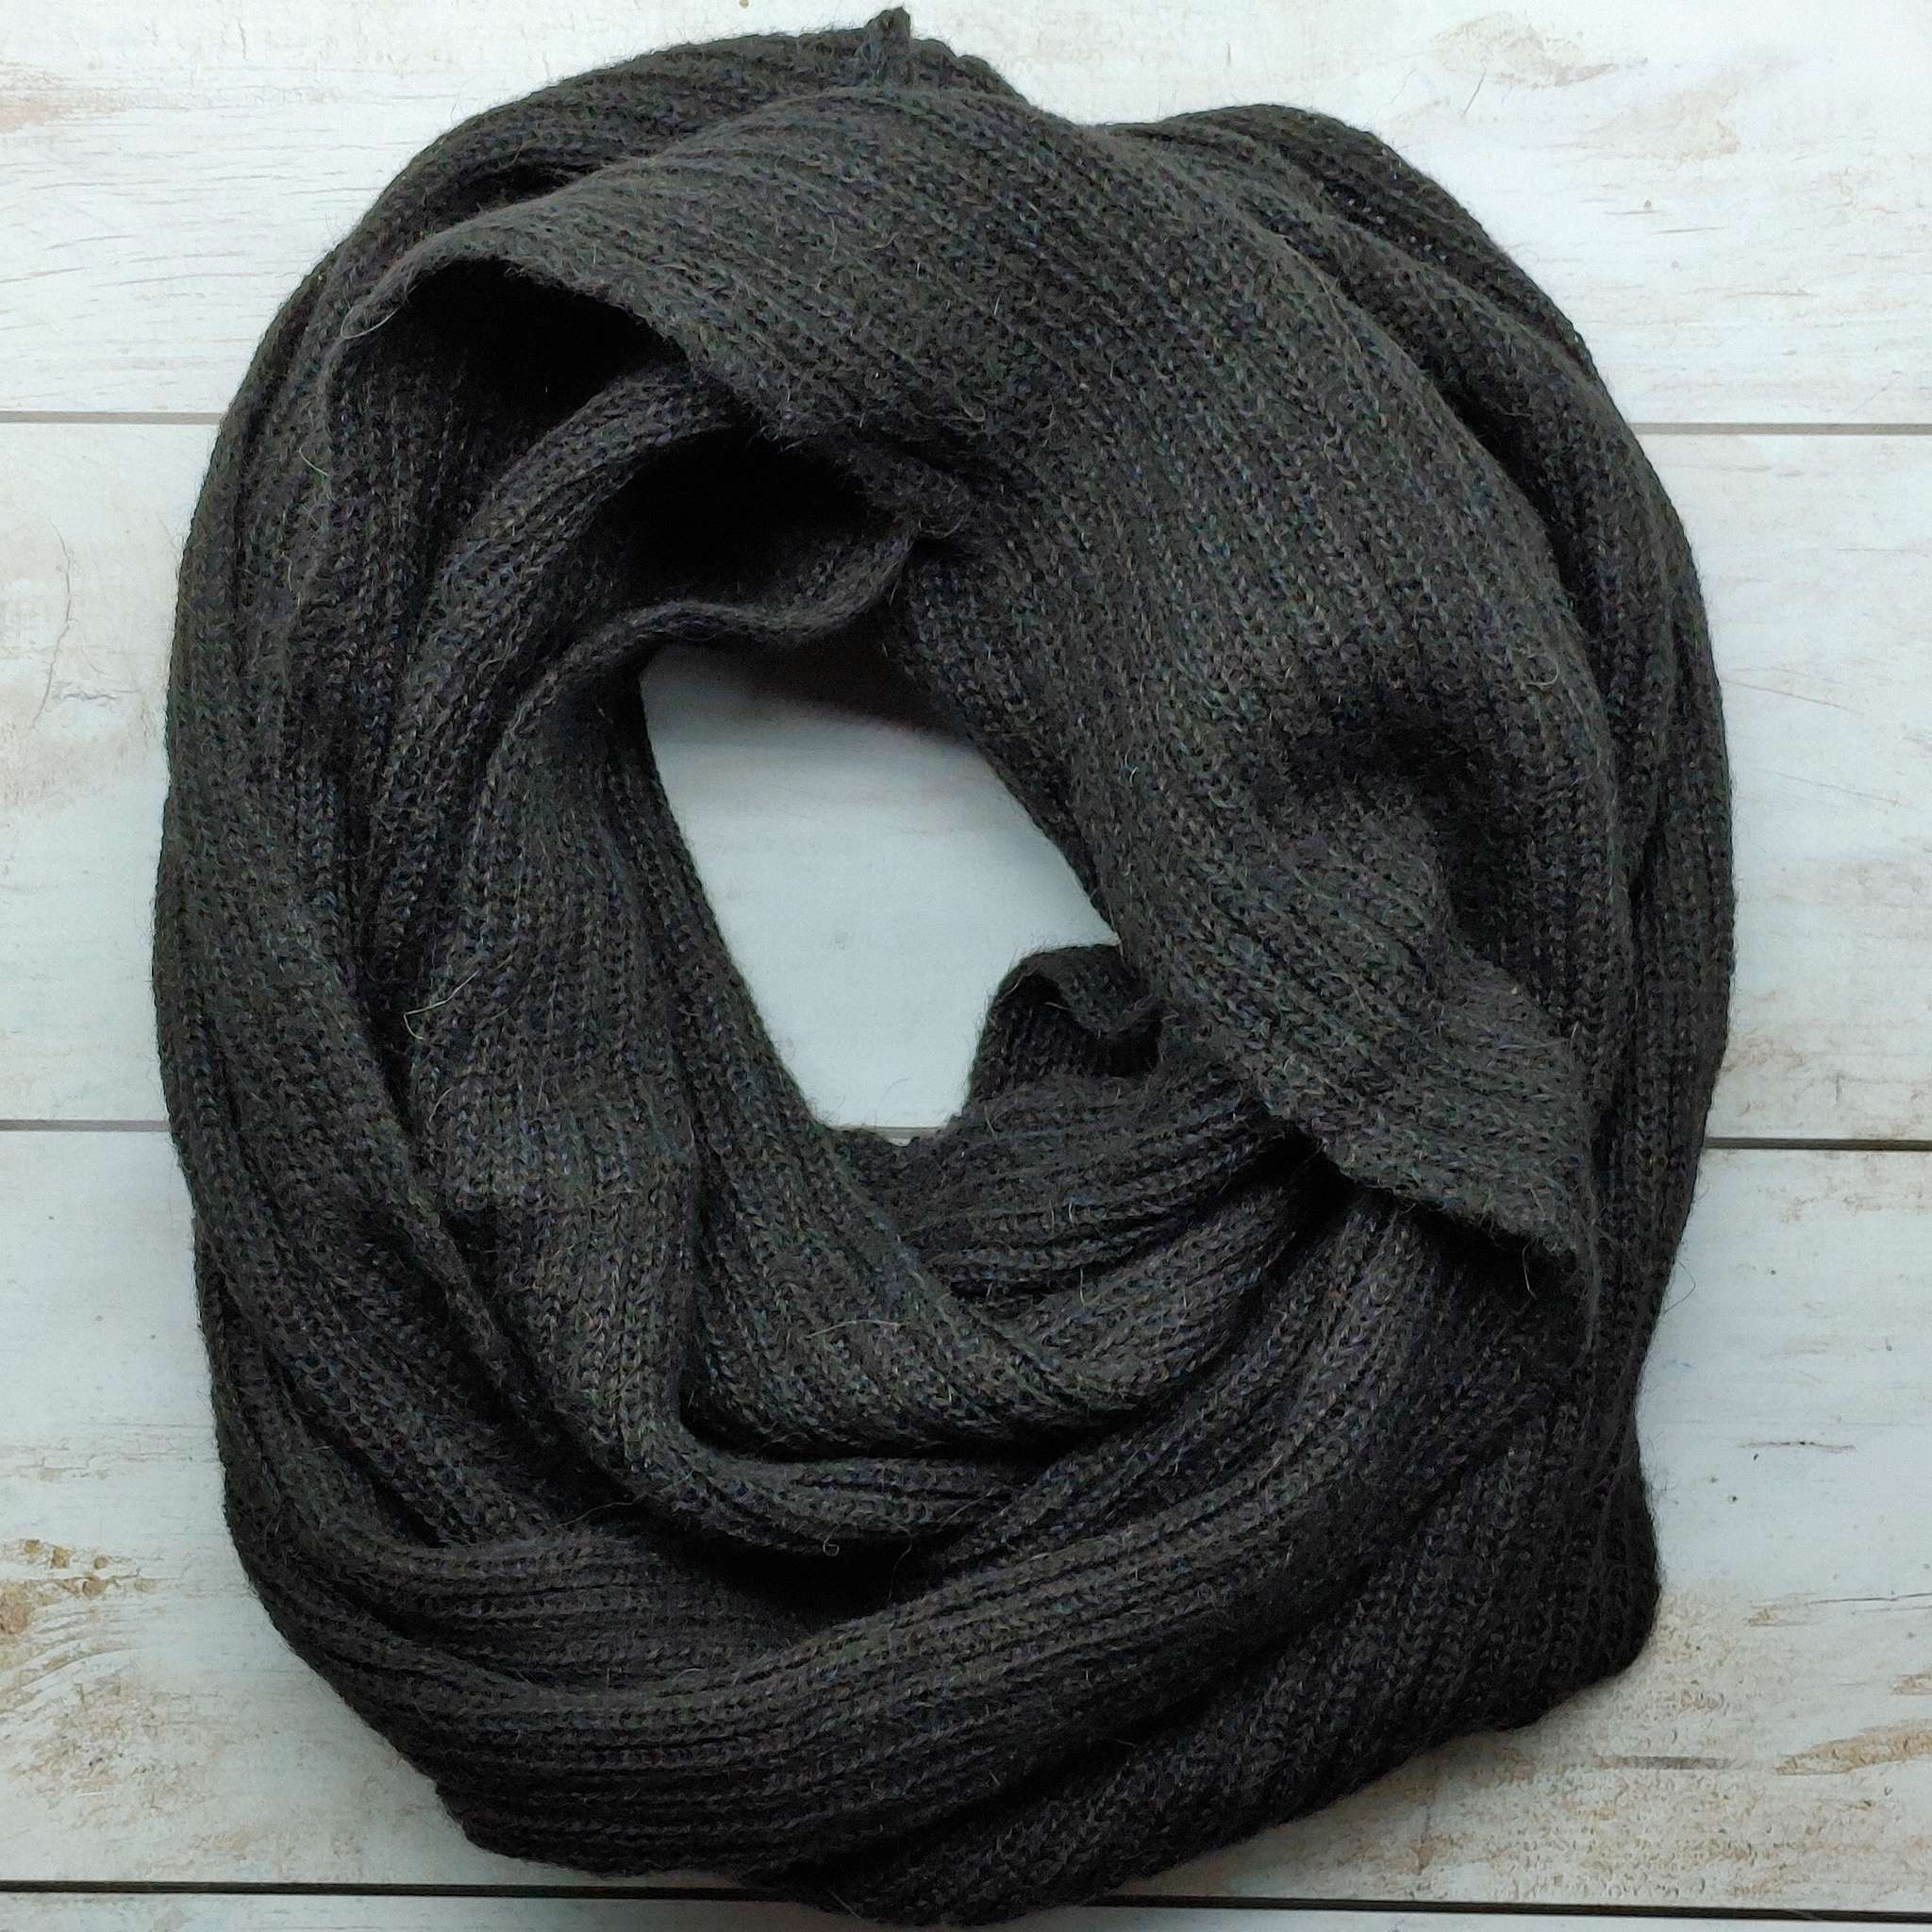 Infinity scarf made from Alpaca fibre